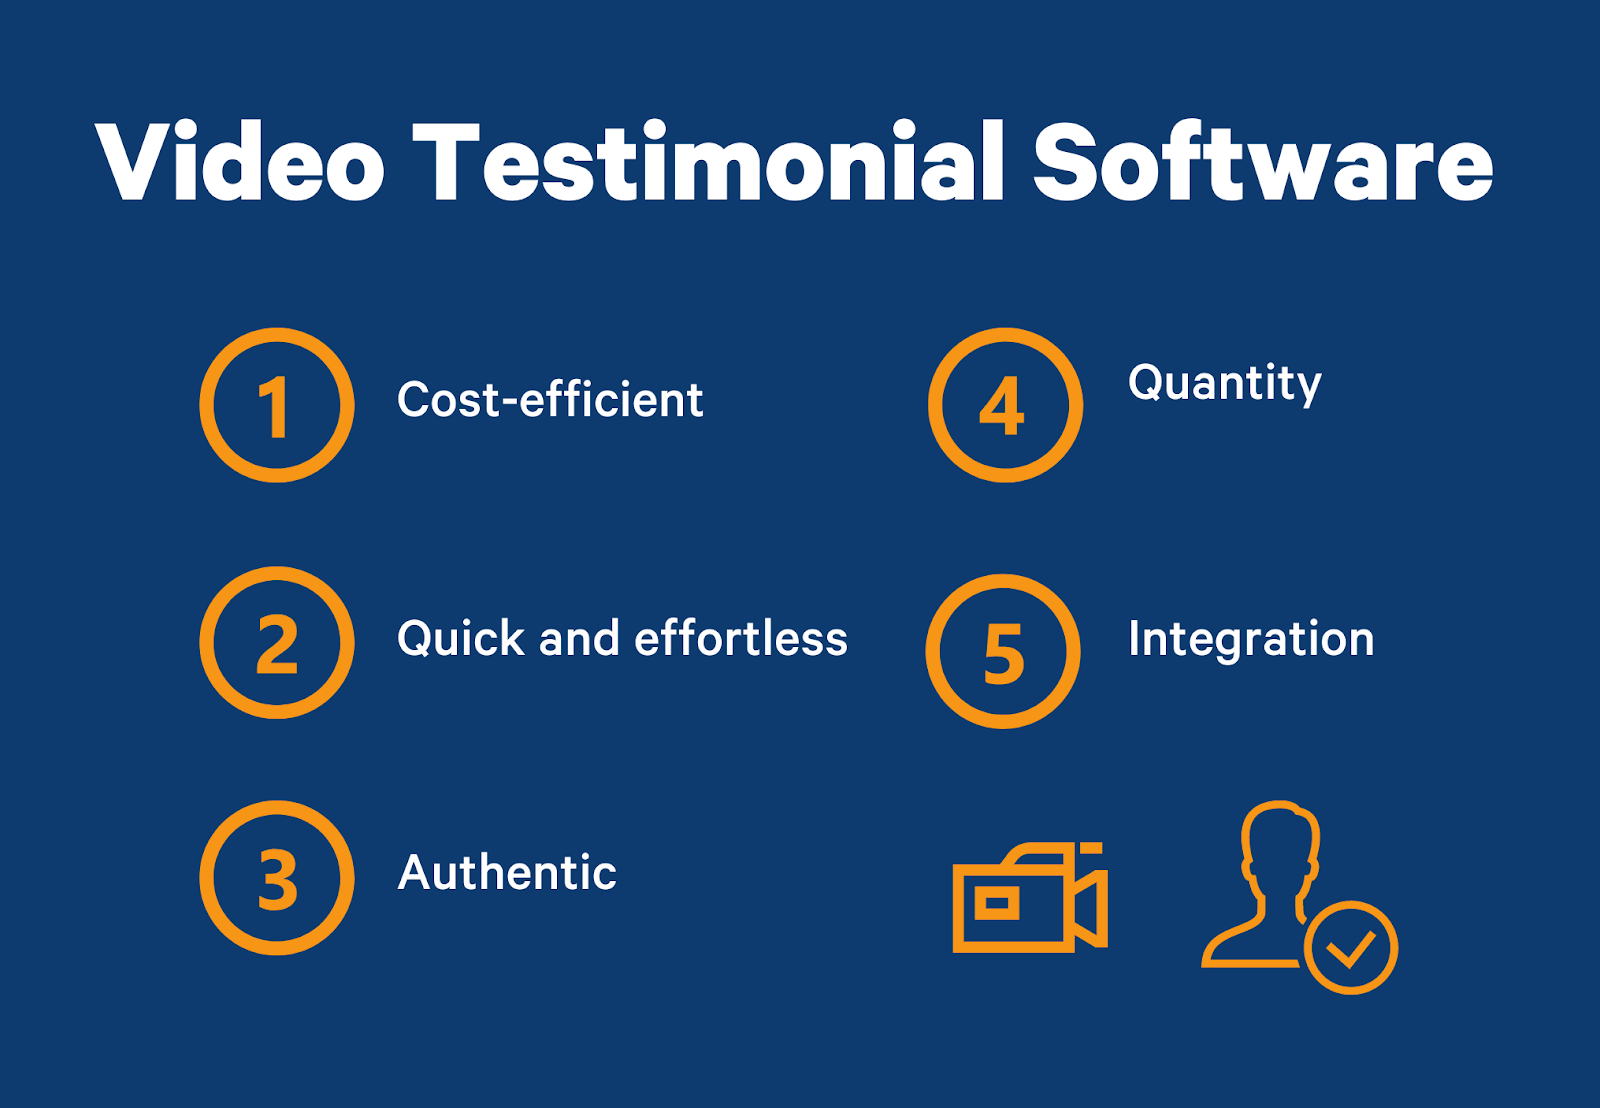 video testimonial software benefits